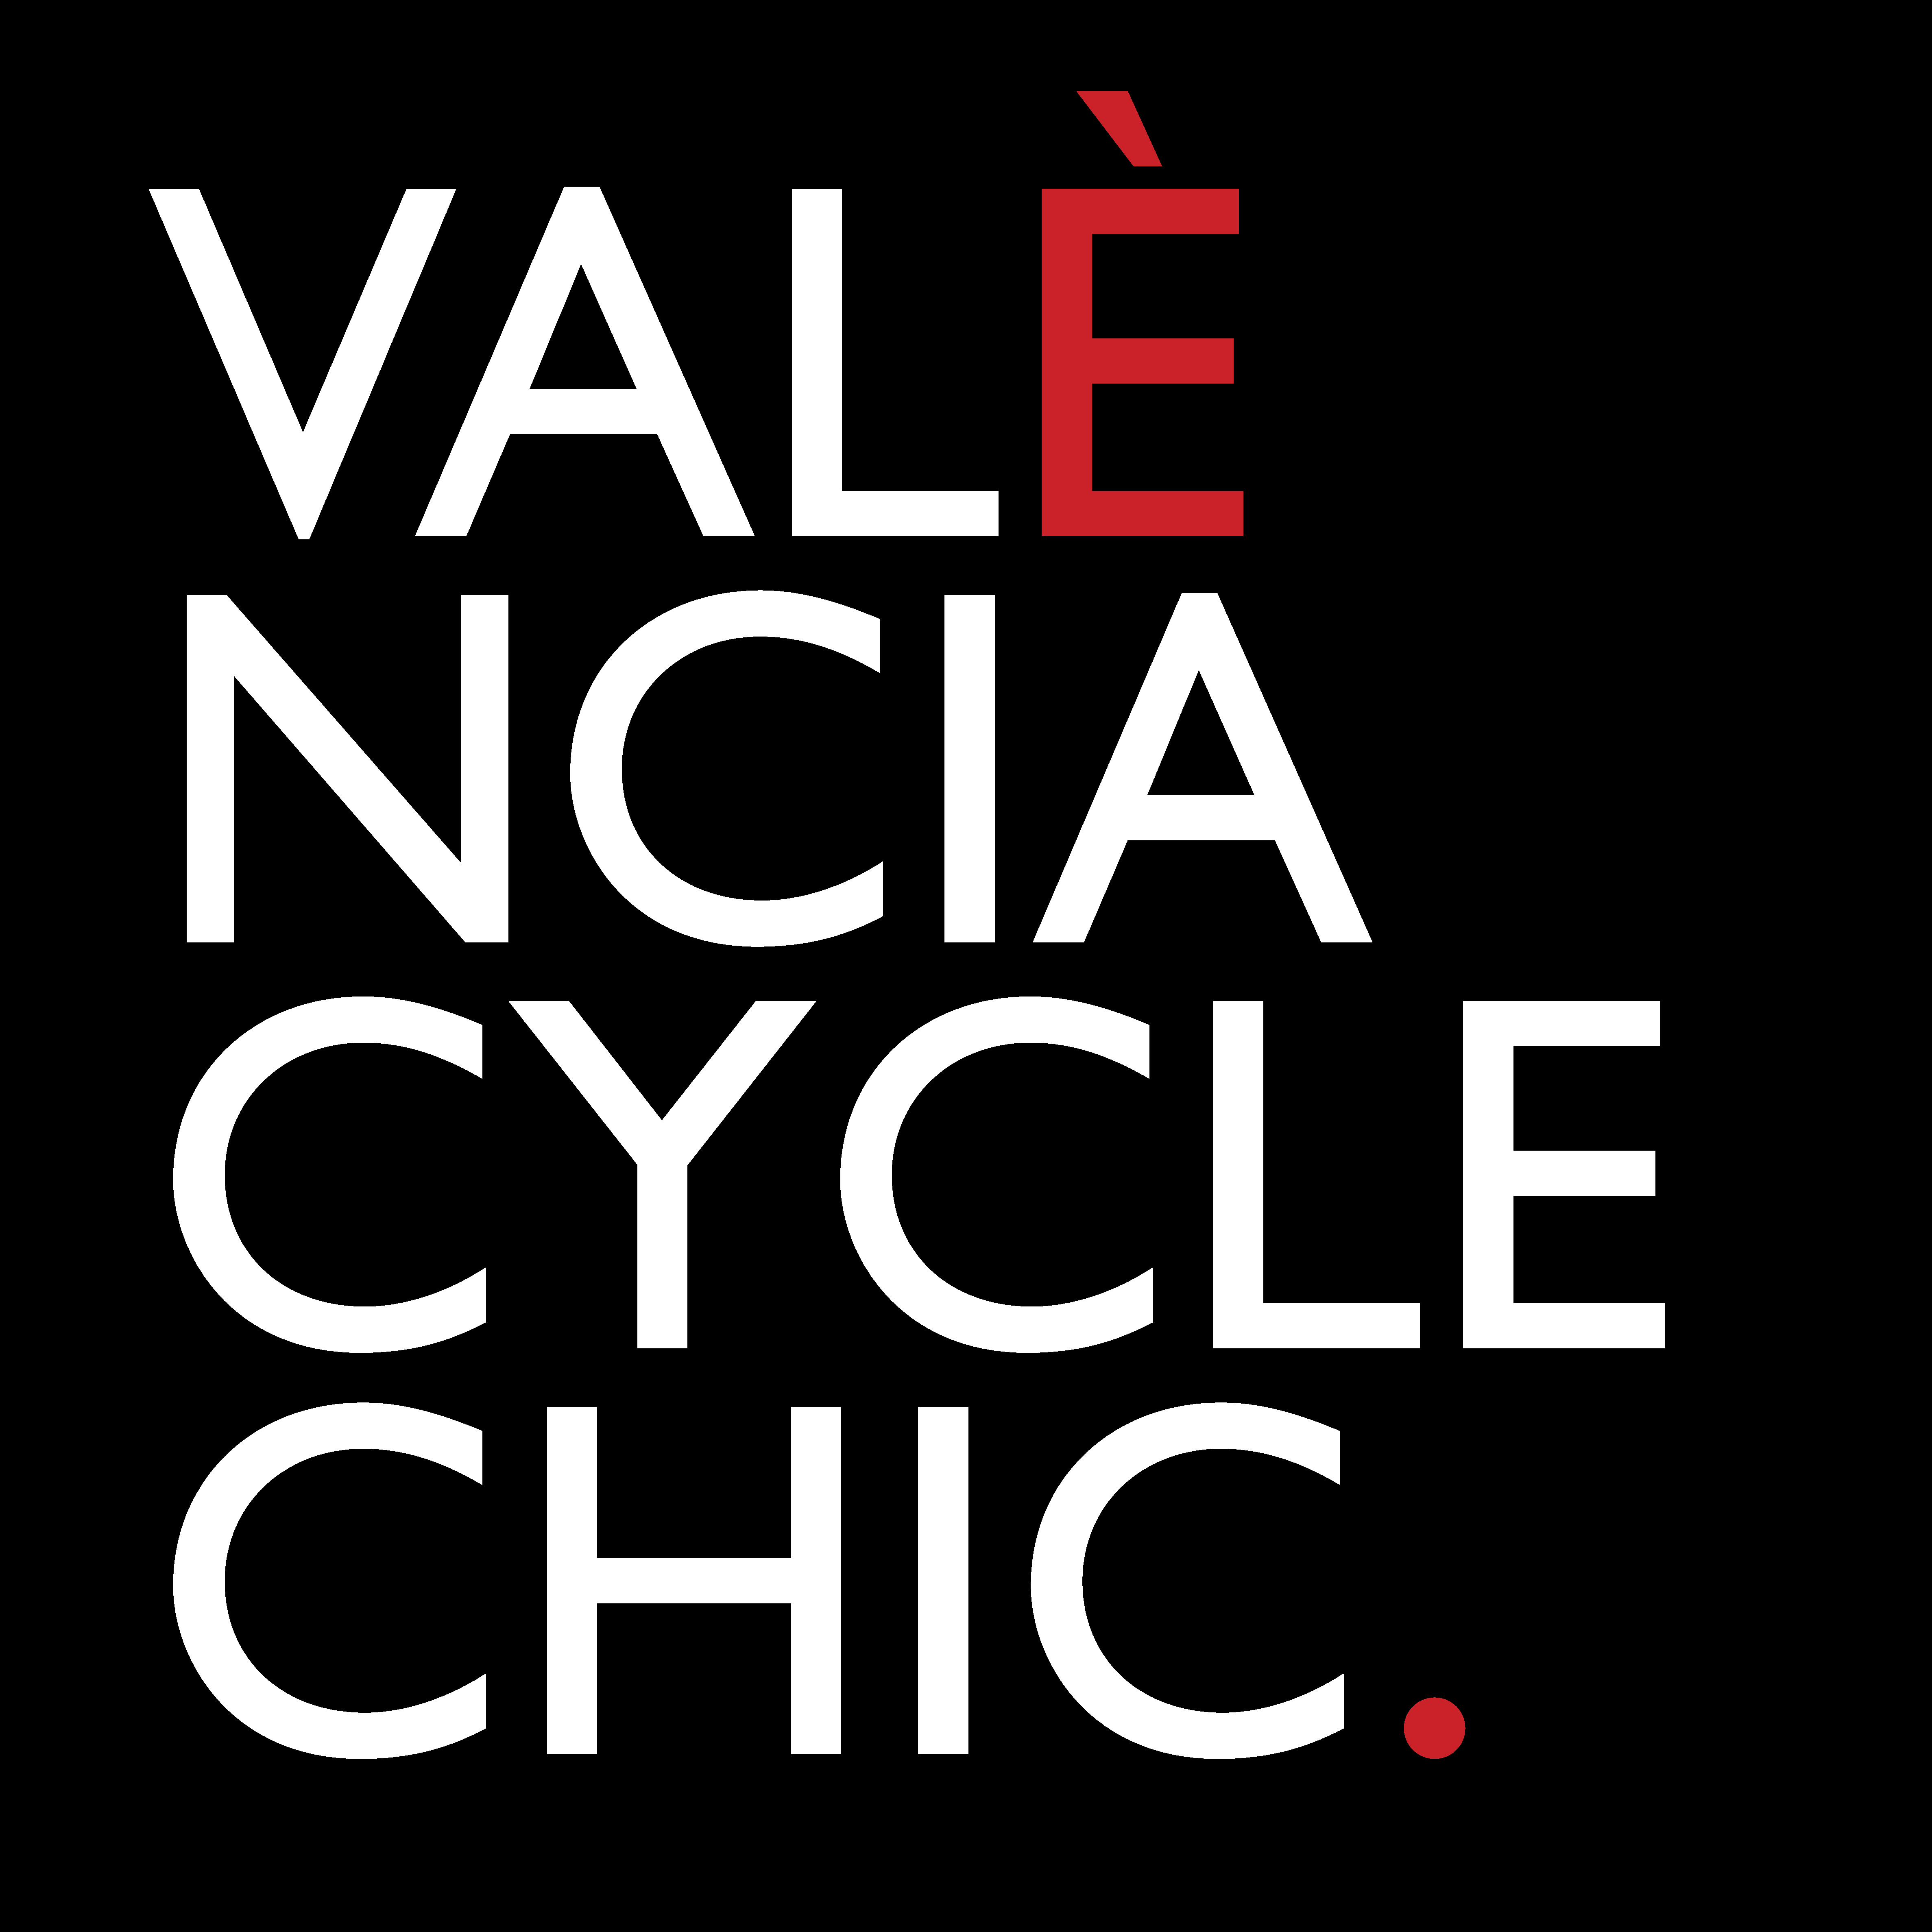 Valencia Cycle Chic